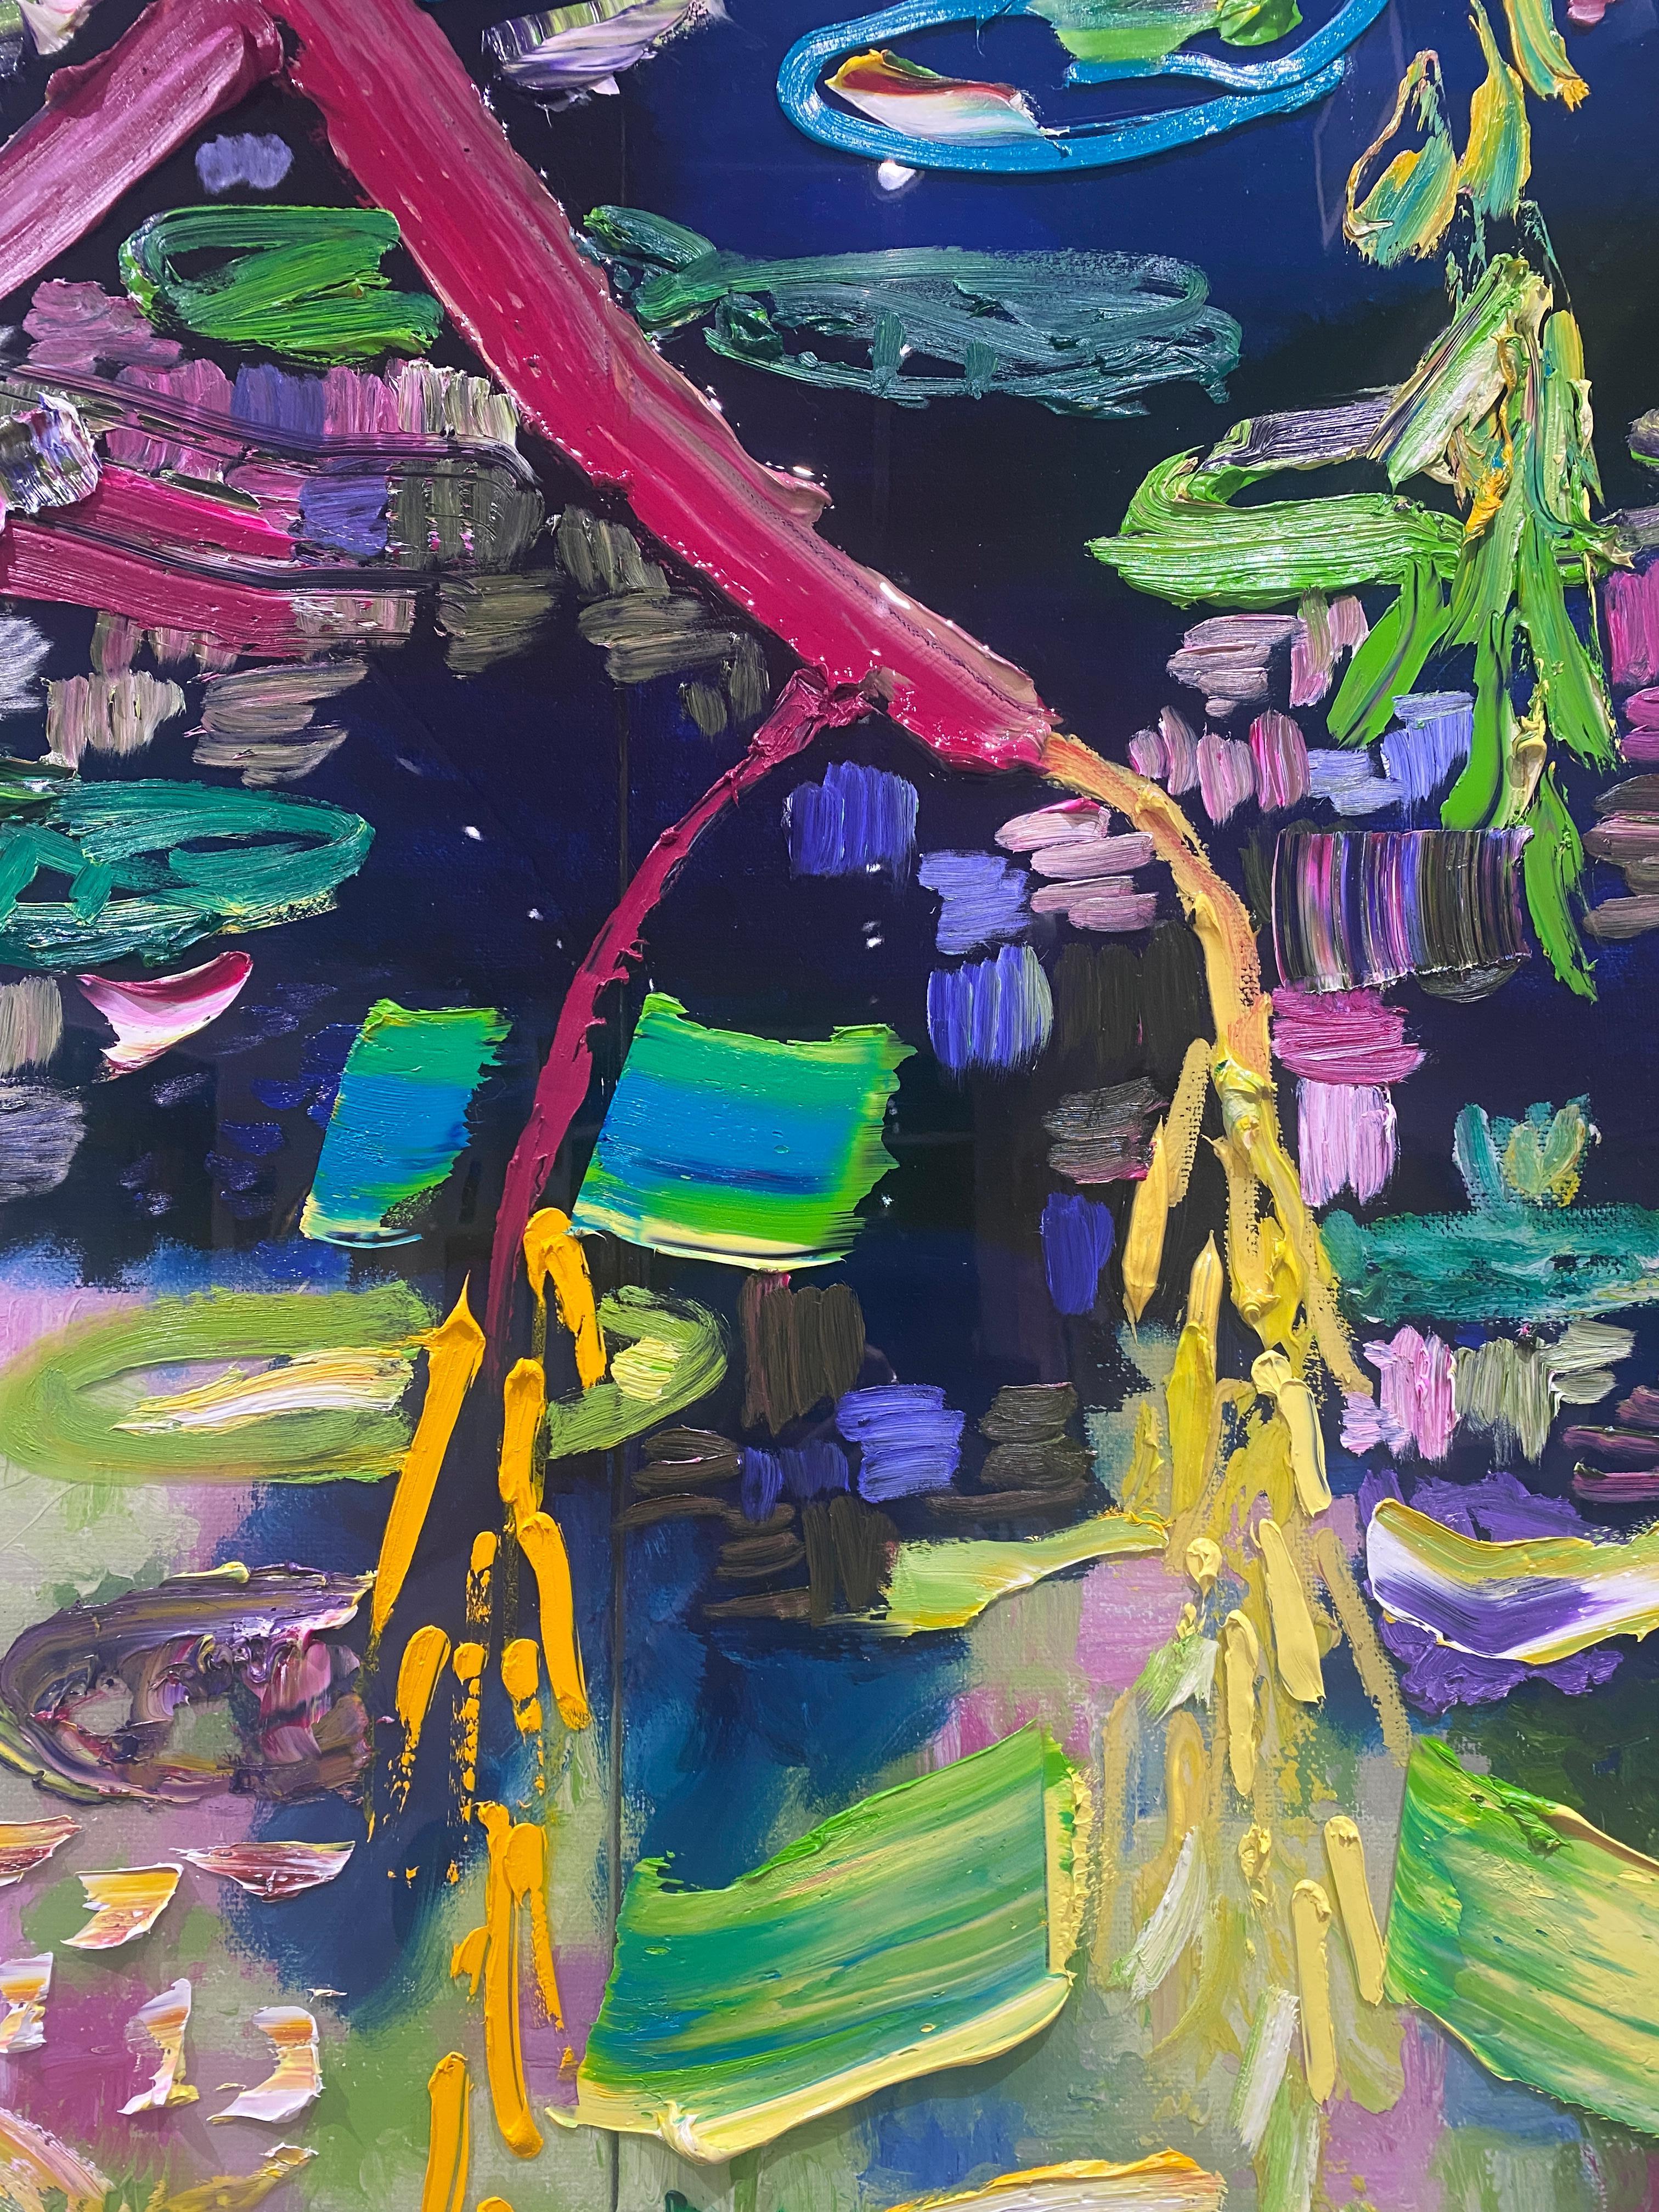 Expanding on his popular series of Waterlily Paintings, Darius Yektai delivers 